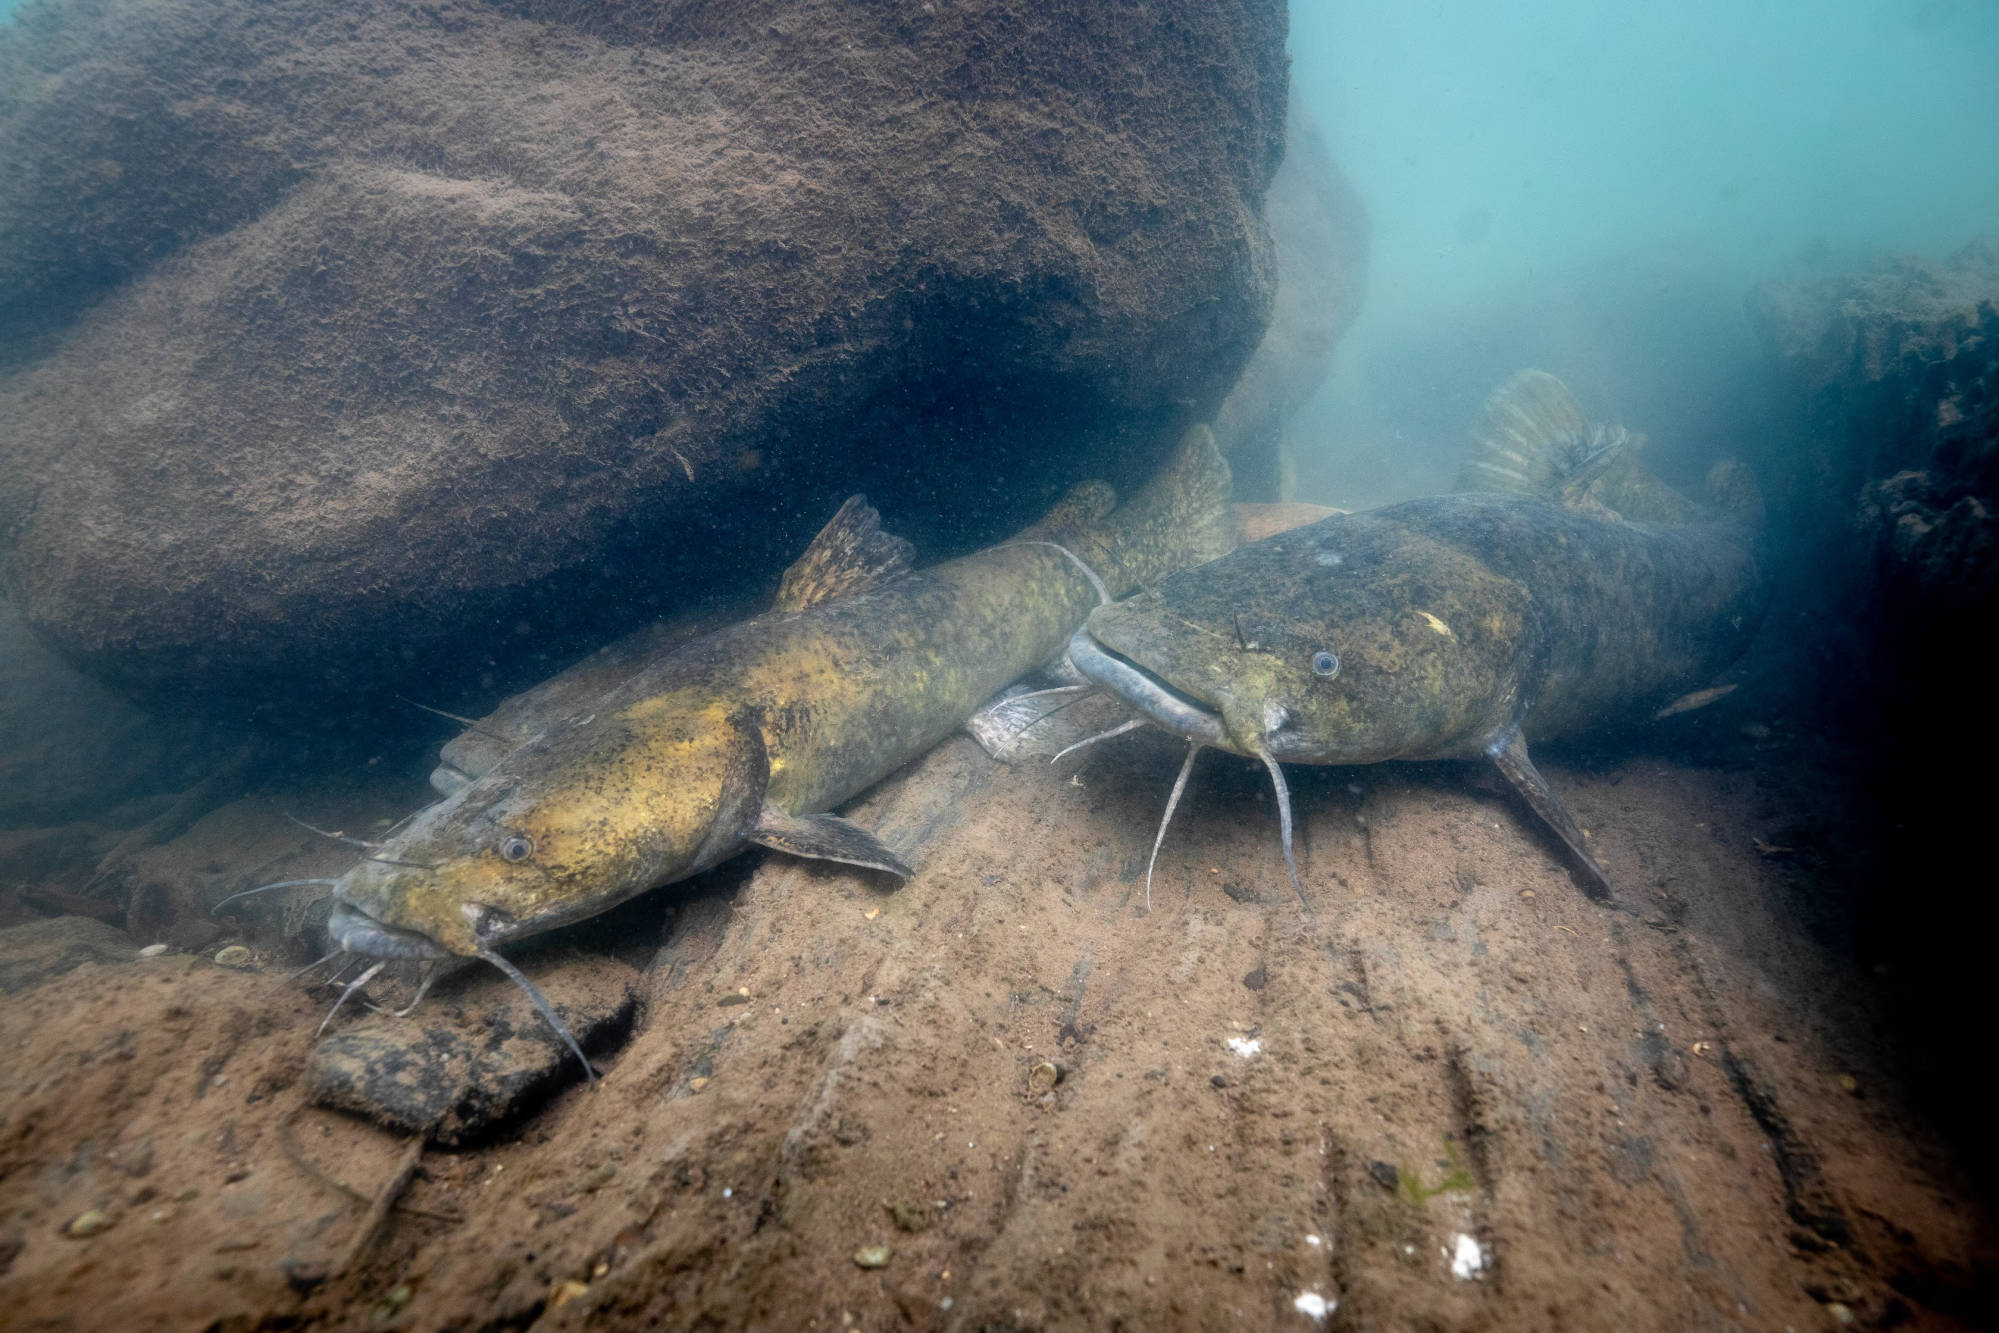 Flathead catfish under a rock.